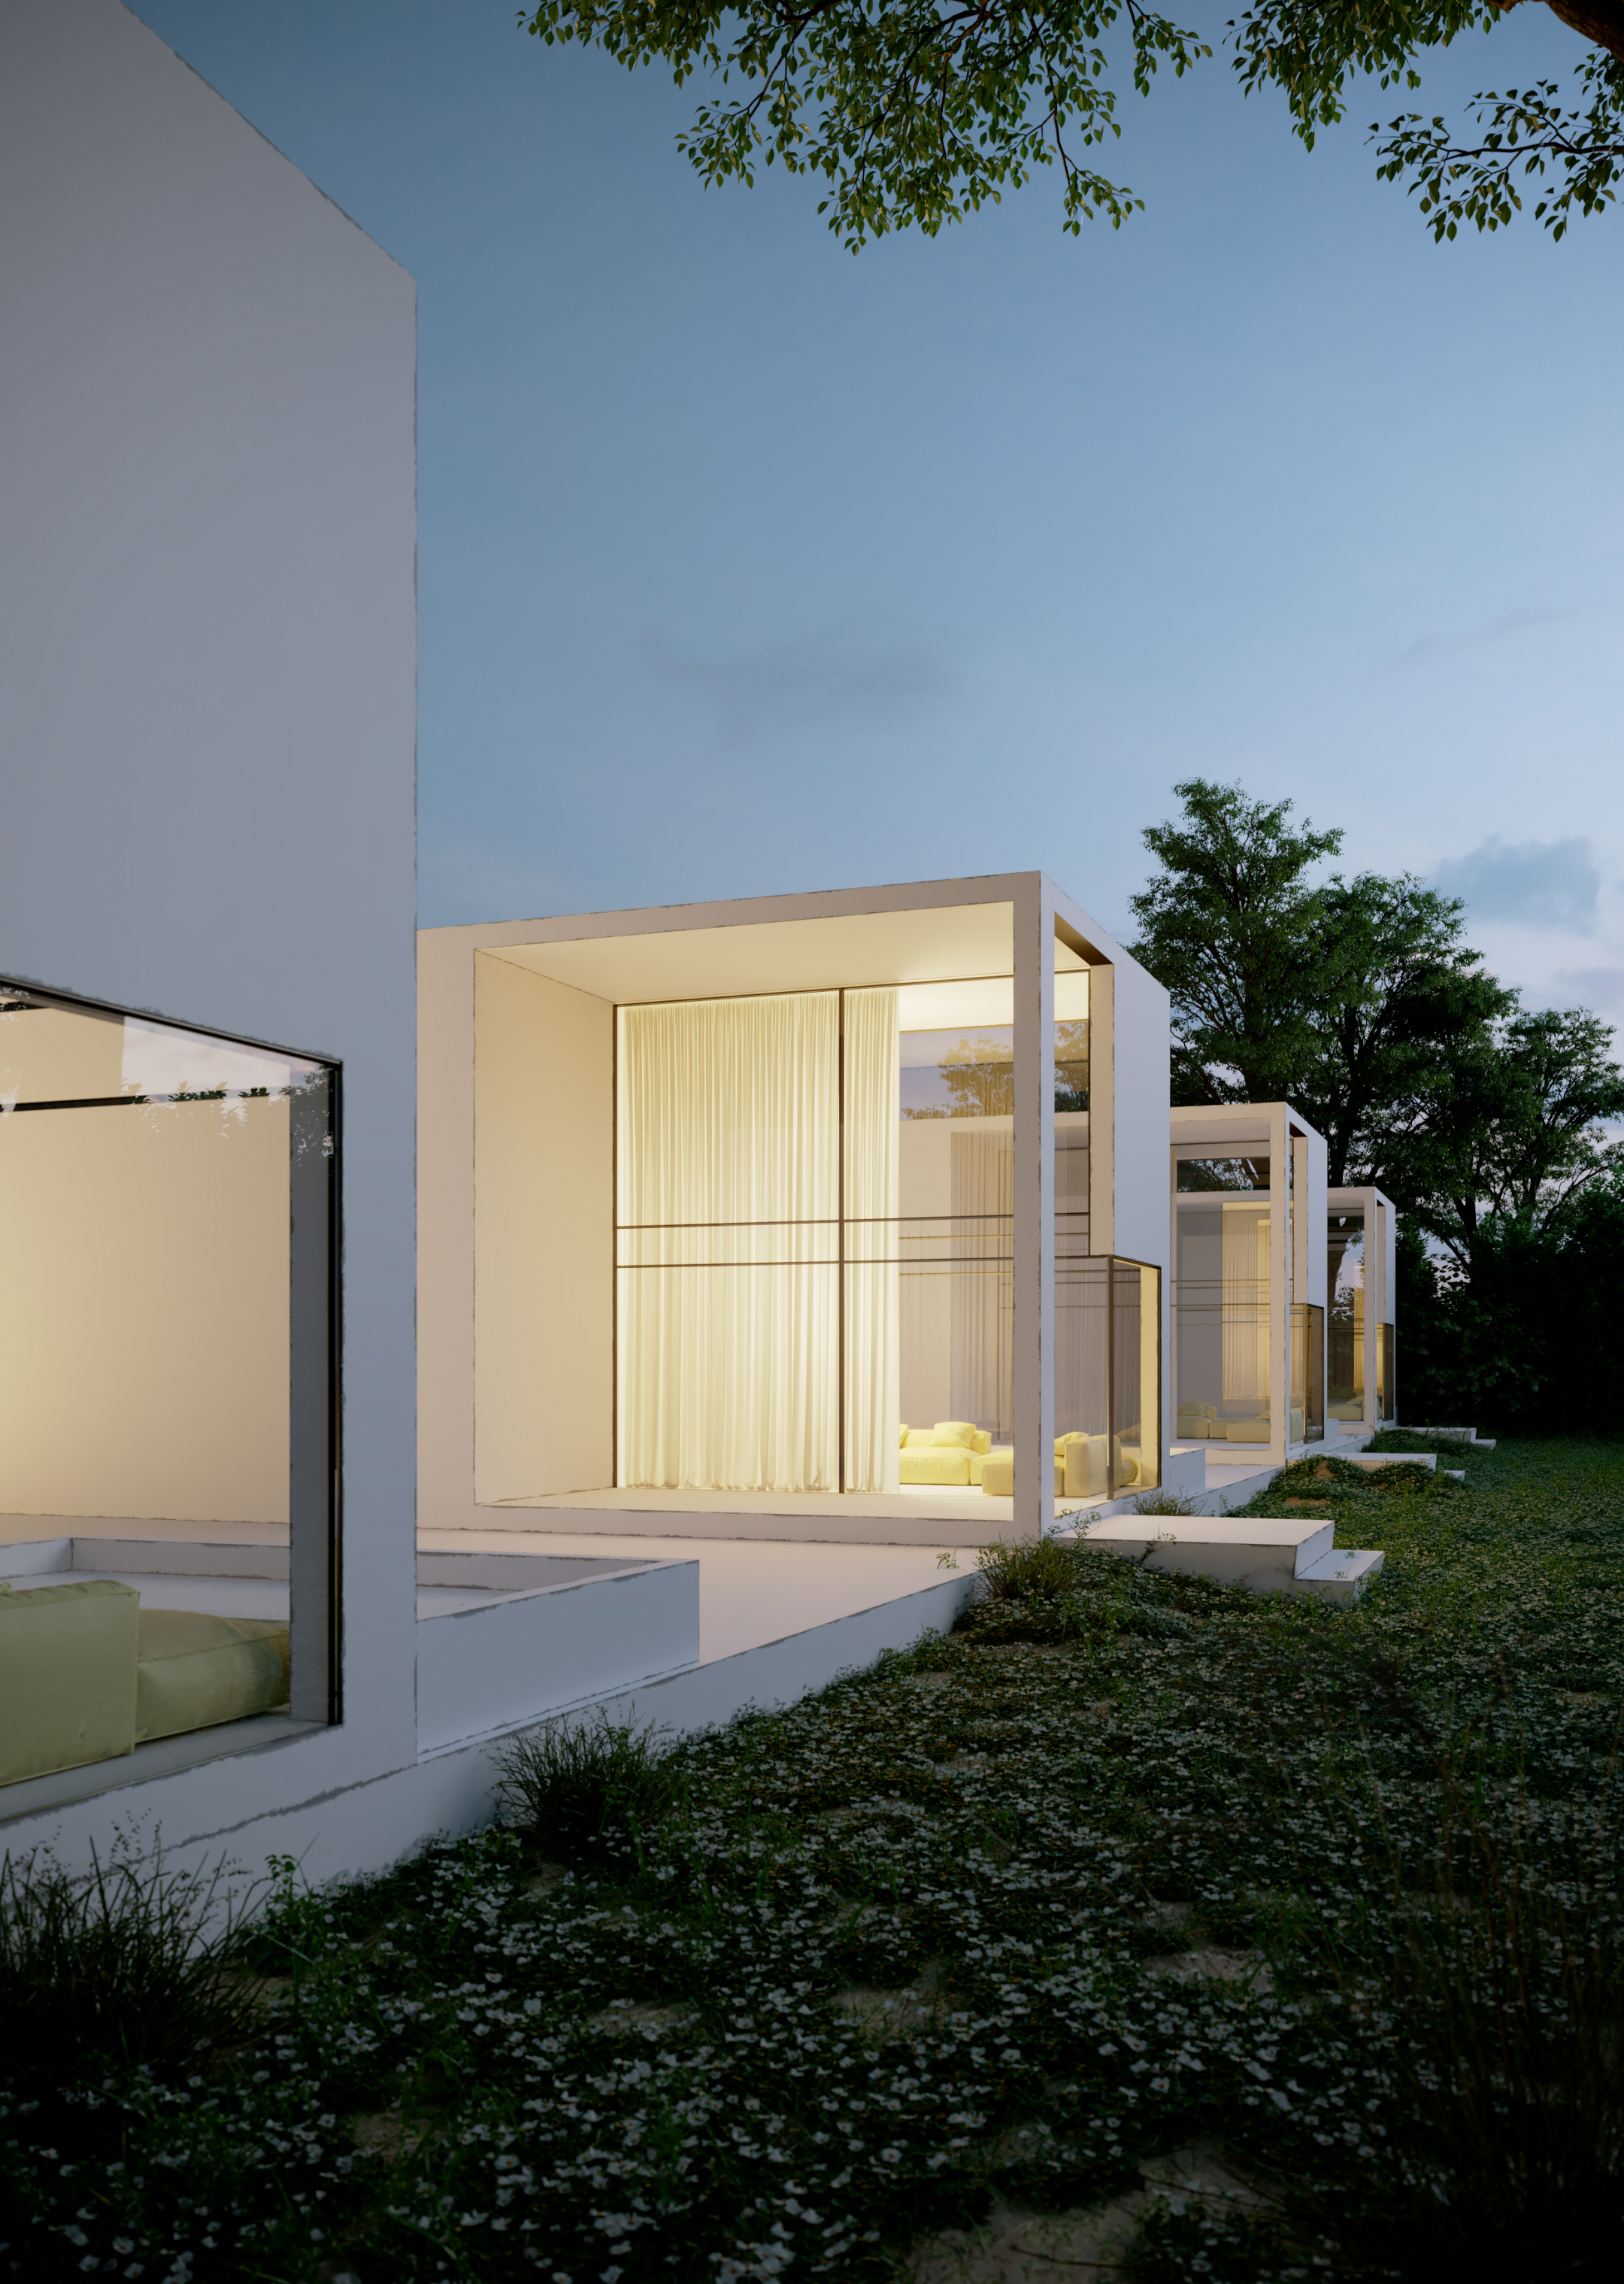 The white townhouse в 3d max corona render изображение